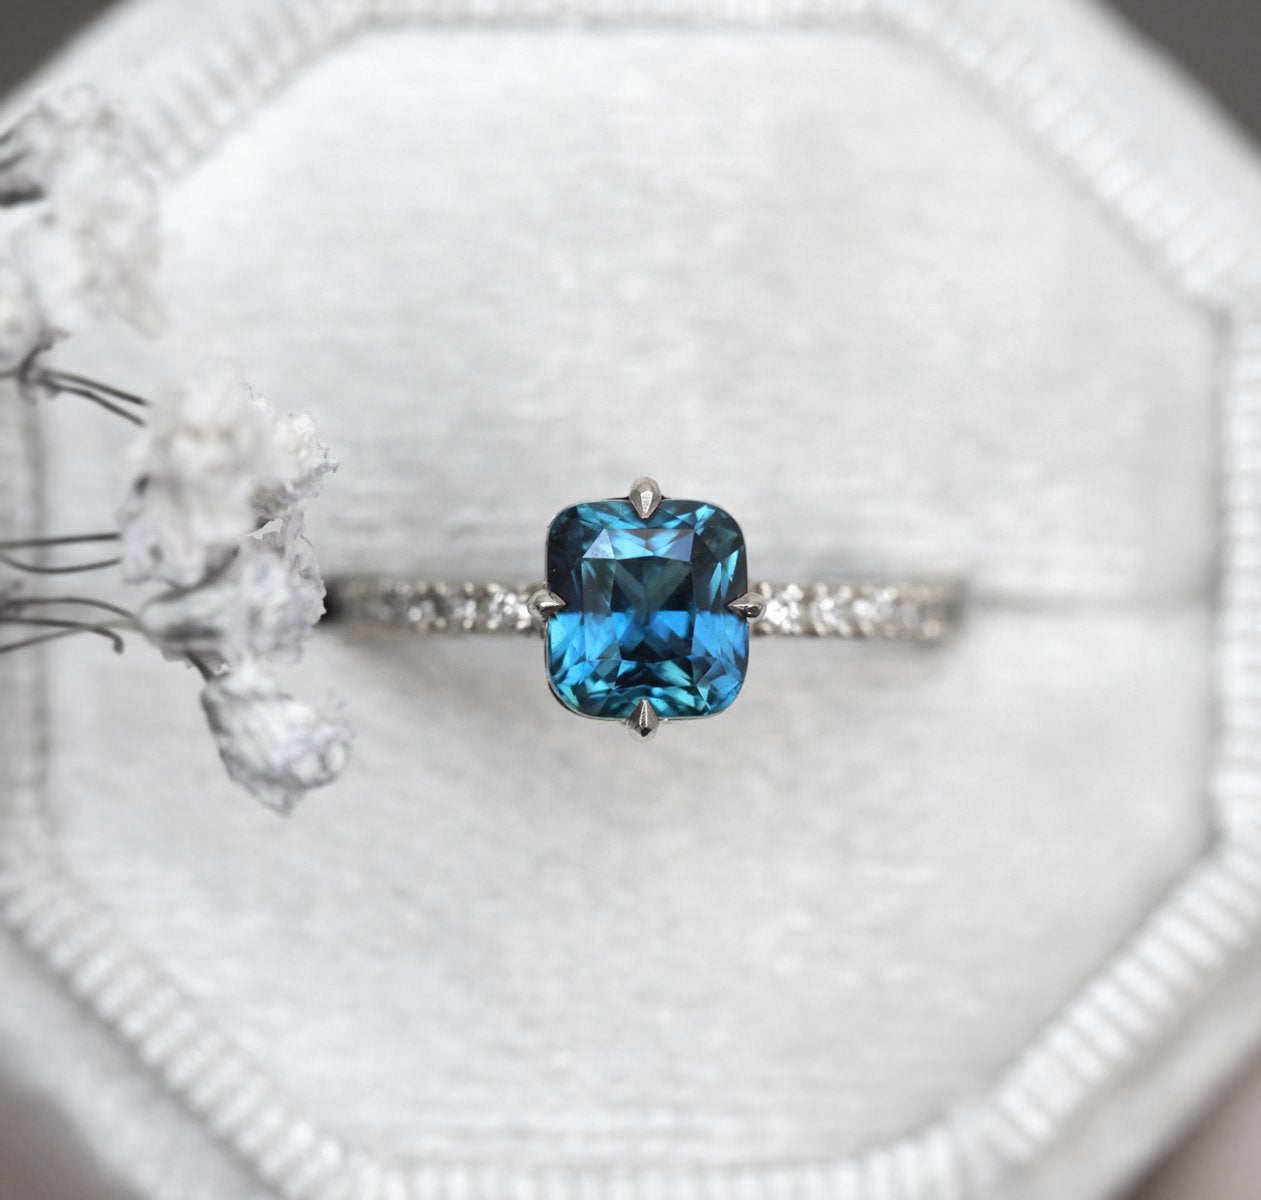 Cushion-cut blue sapphire eternity ring with white diamonds